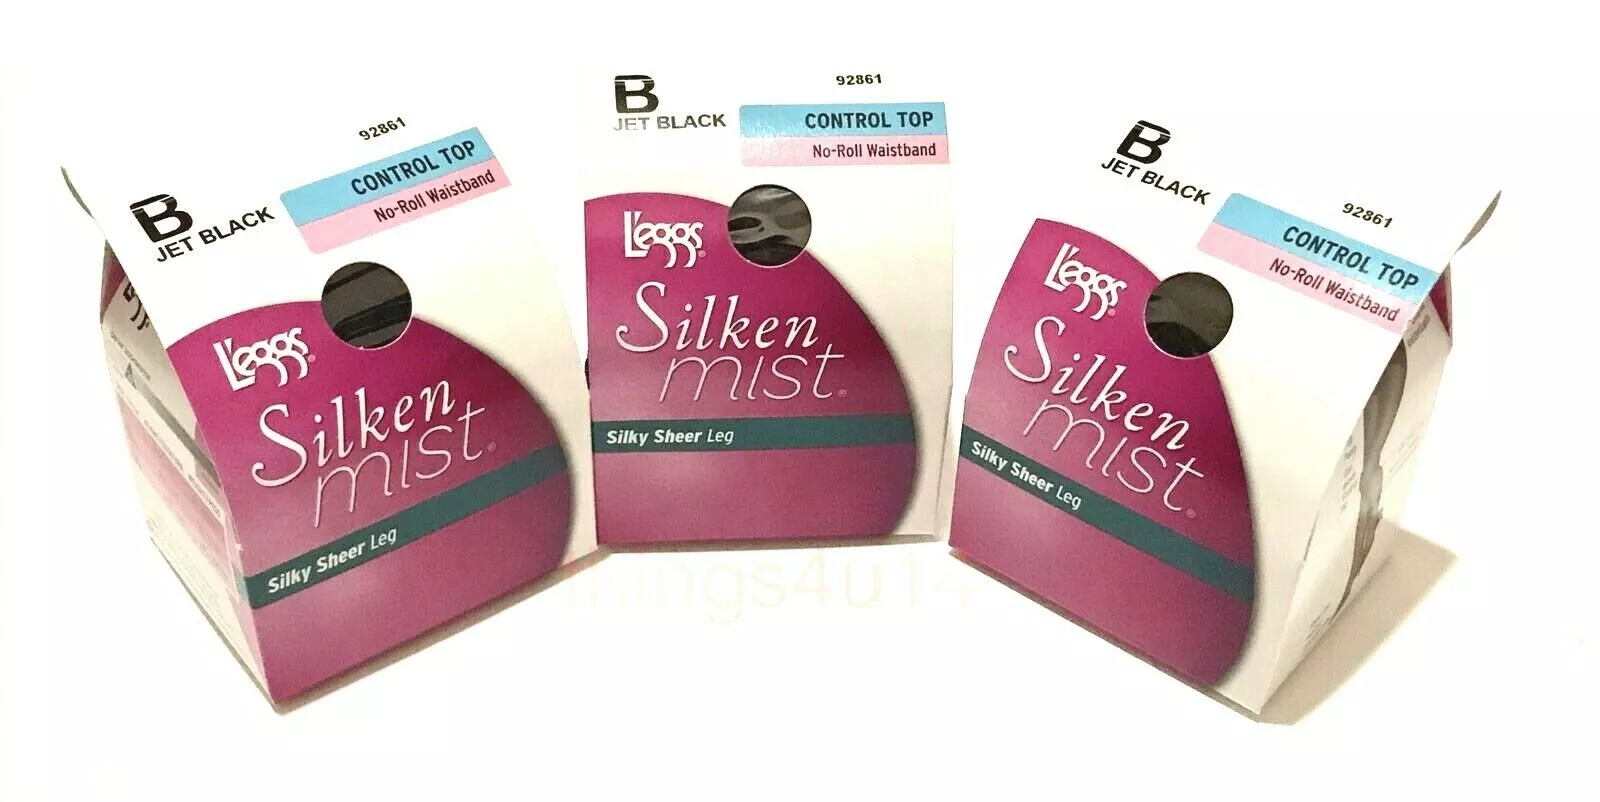 Set of 3 L'eggs Silken Mist Control Top Pantyhose black Mist 20207 Size B  for sale online